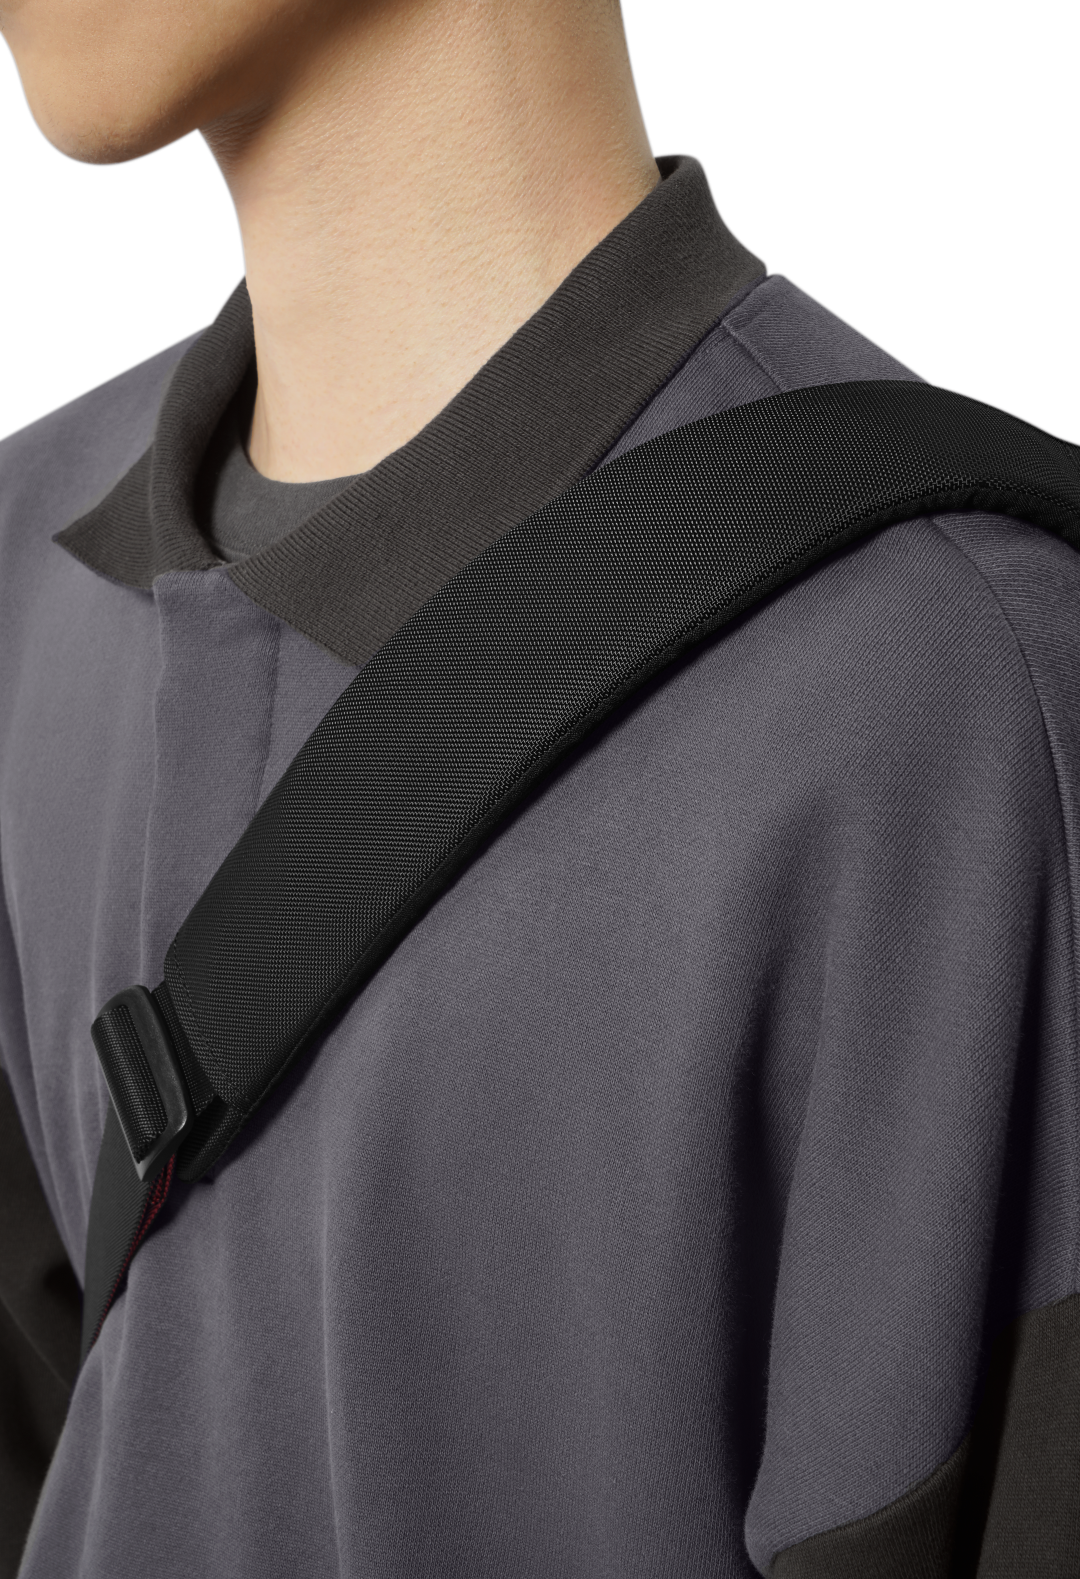 Túi đeo chéo Tomtoc Monster Hunter Rise - H02 Royal Order Sling Bag M for 11